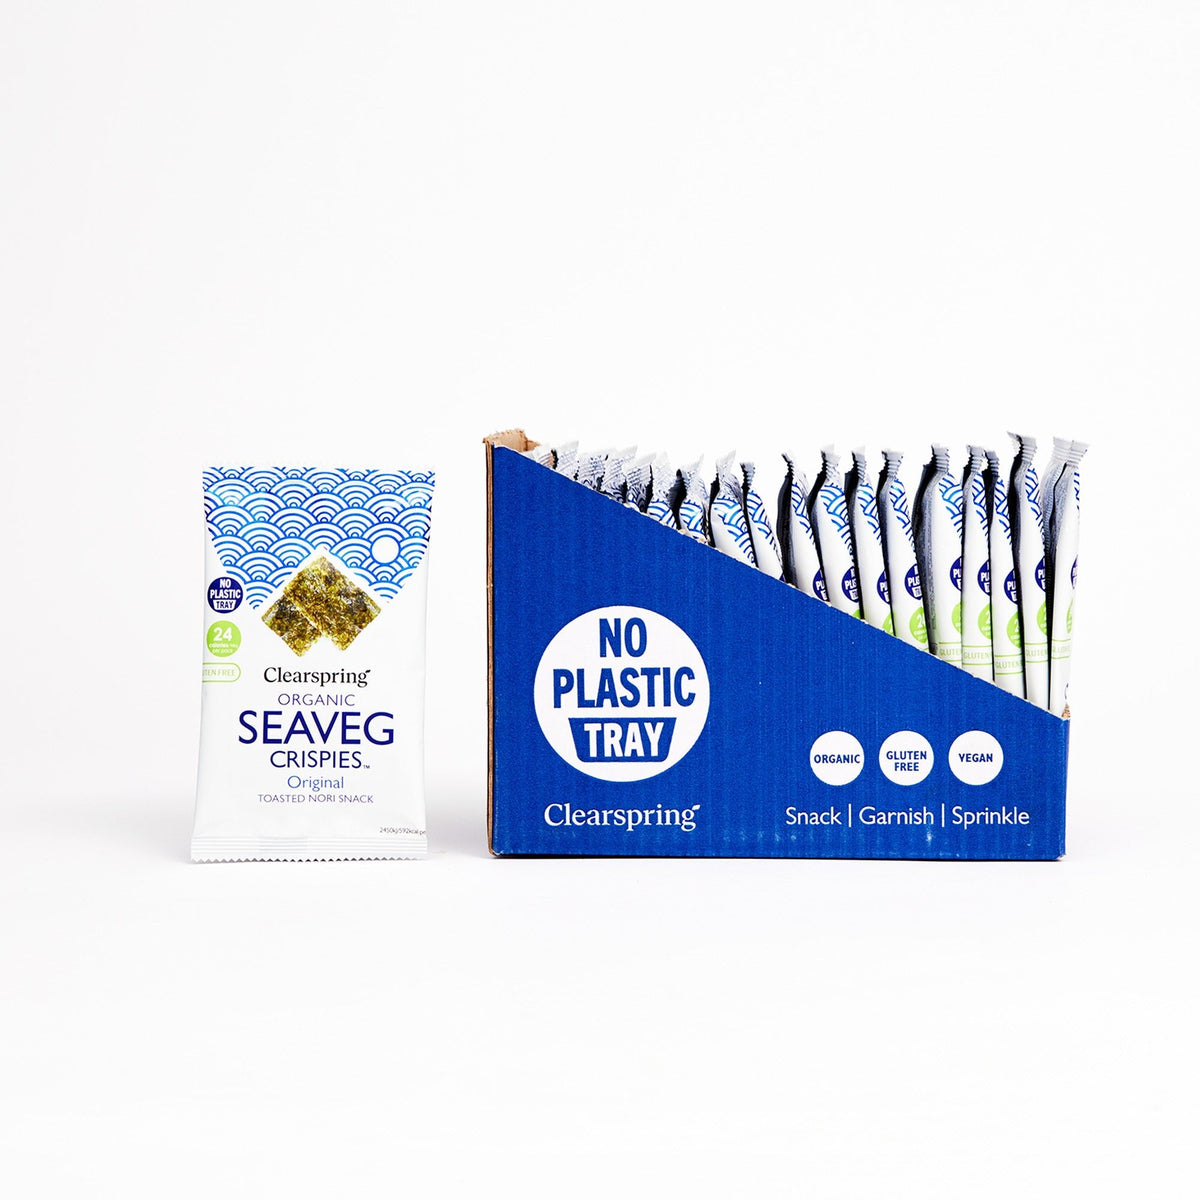 Organic Seaveg Crispies - Original (Crispy Seaweed Thins) (20 Pack)